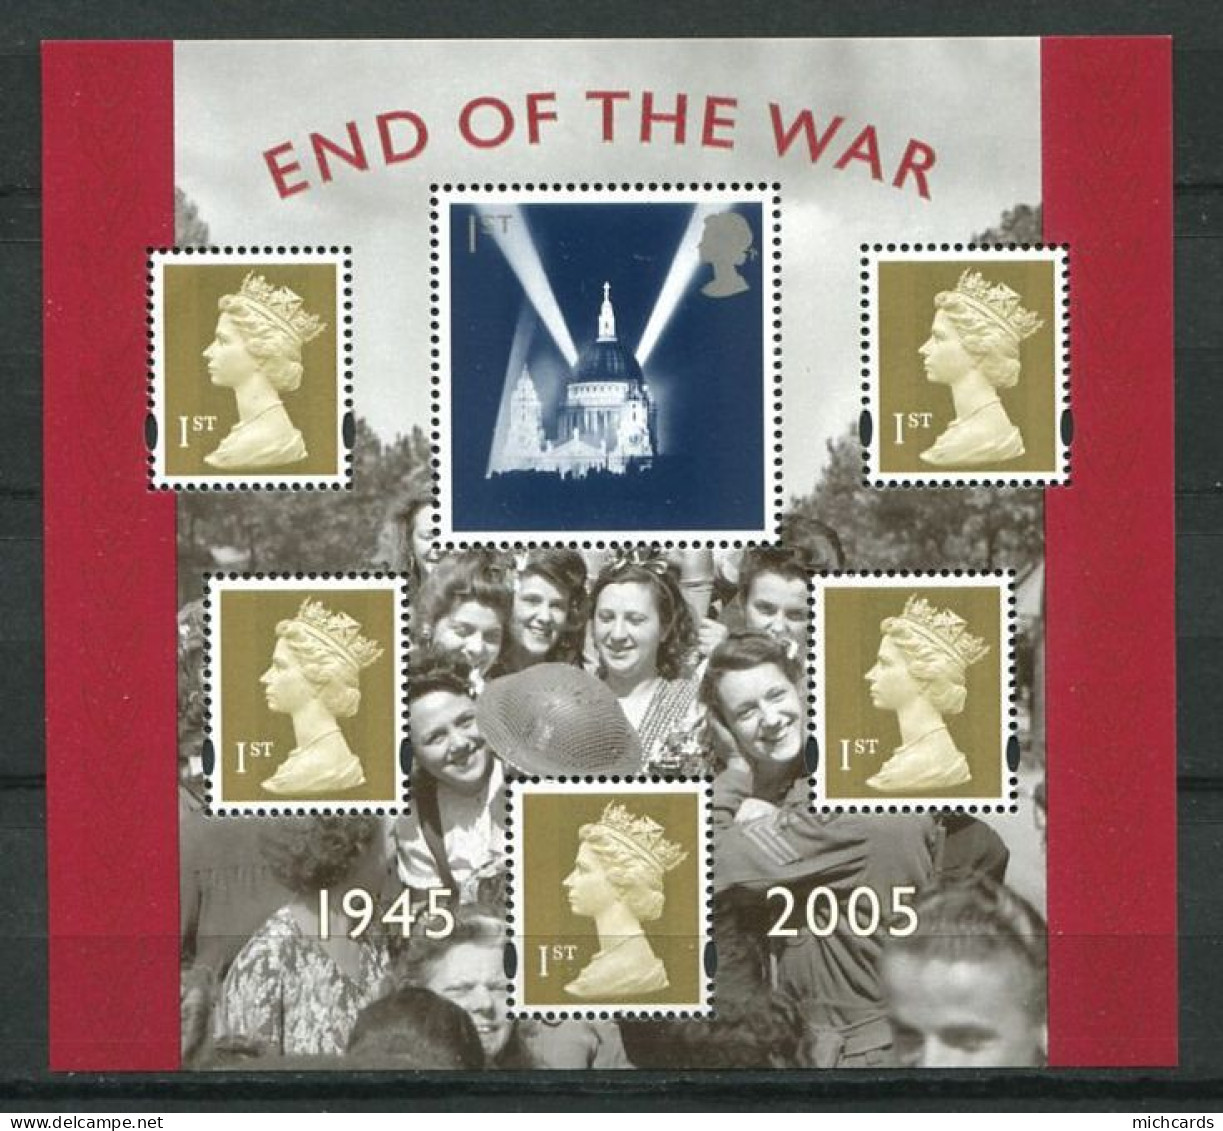 191 GRANDE BRETAGNE 2005 - Yvert BF 32 - Fin De La 2e Guerre Mondiale - Neuf ** (MNH) Sans Charniere - Ungebraucht